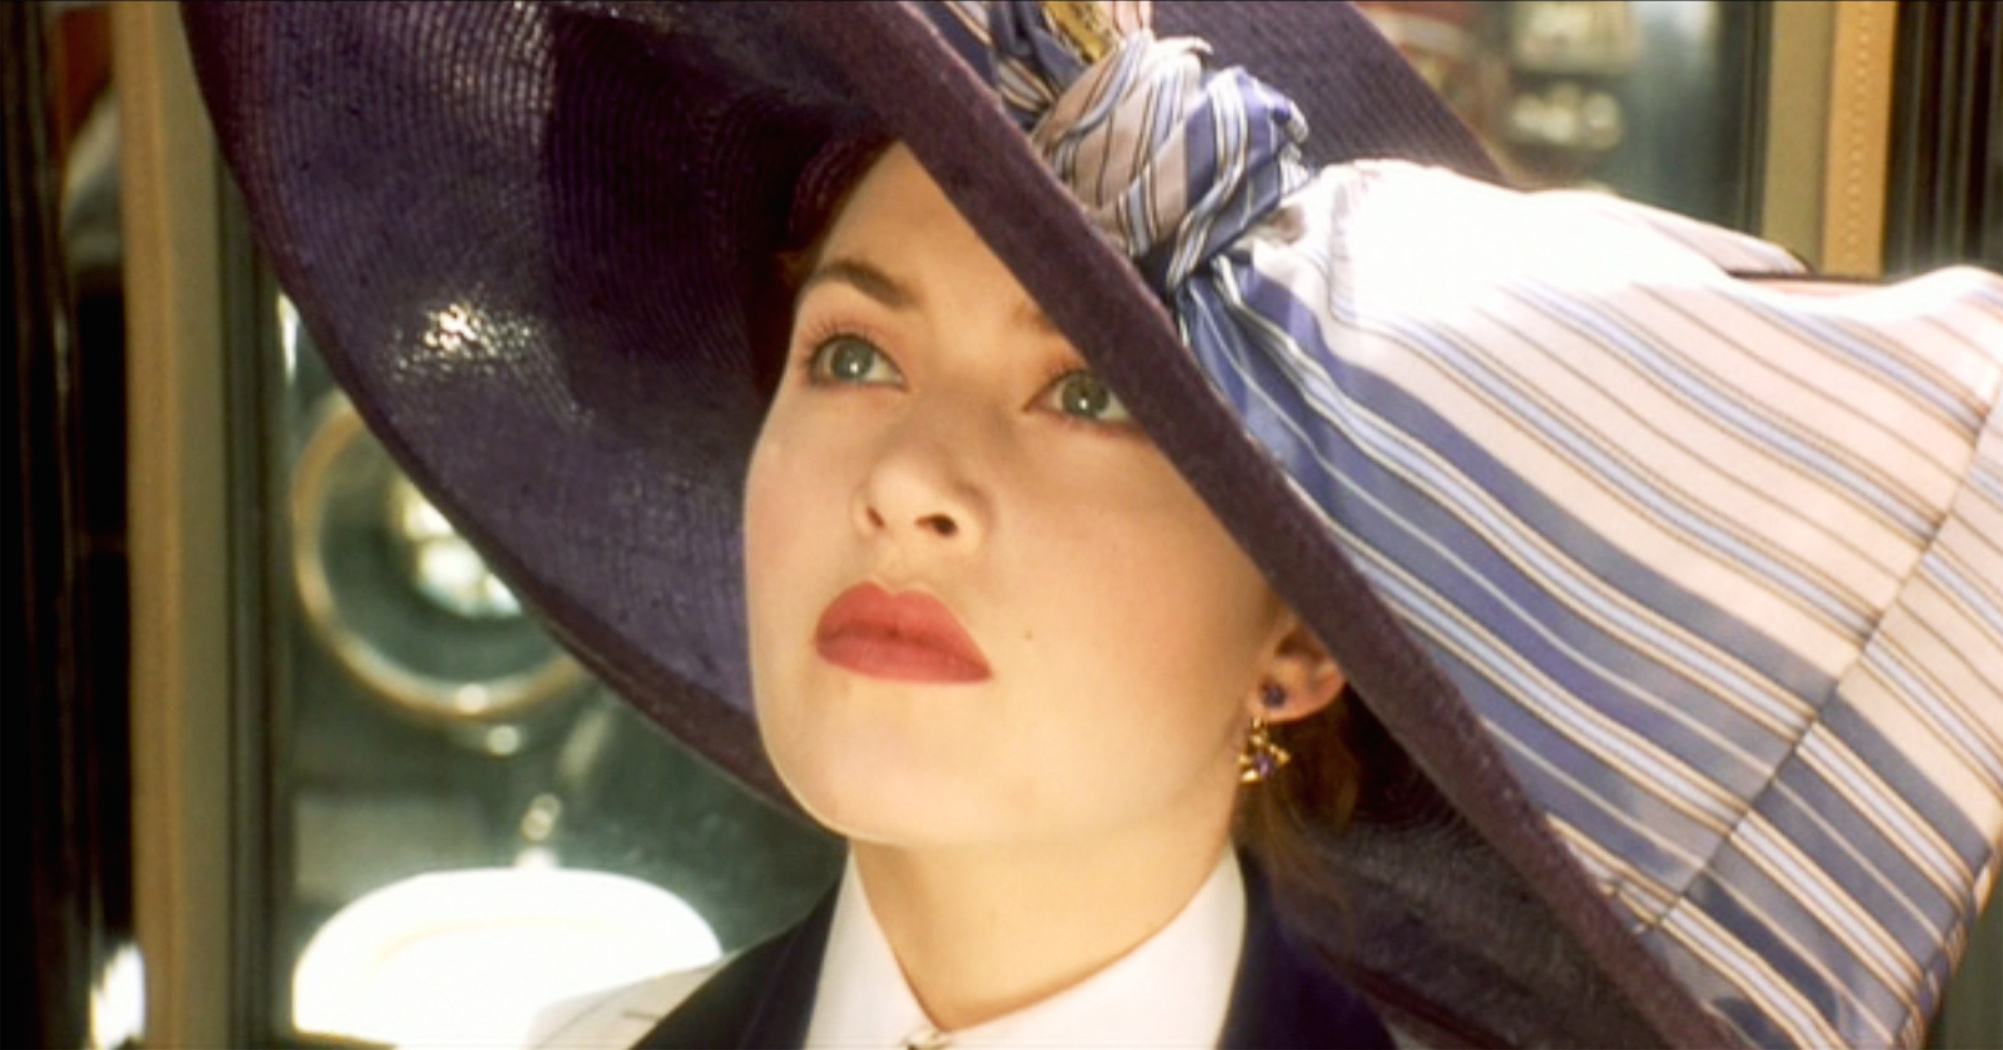 Kommuner straf Sædvanlig What Is Kate Winslet's Age and How Old Was She When She Filmed 'Titanic'?